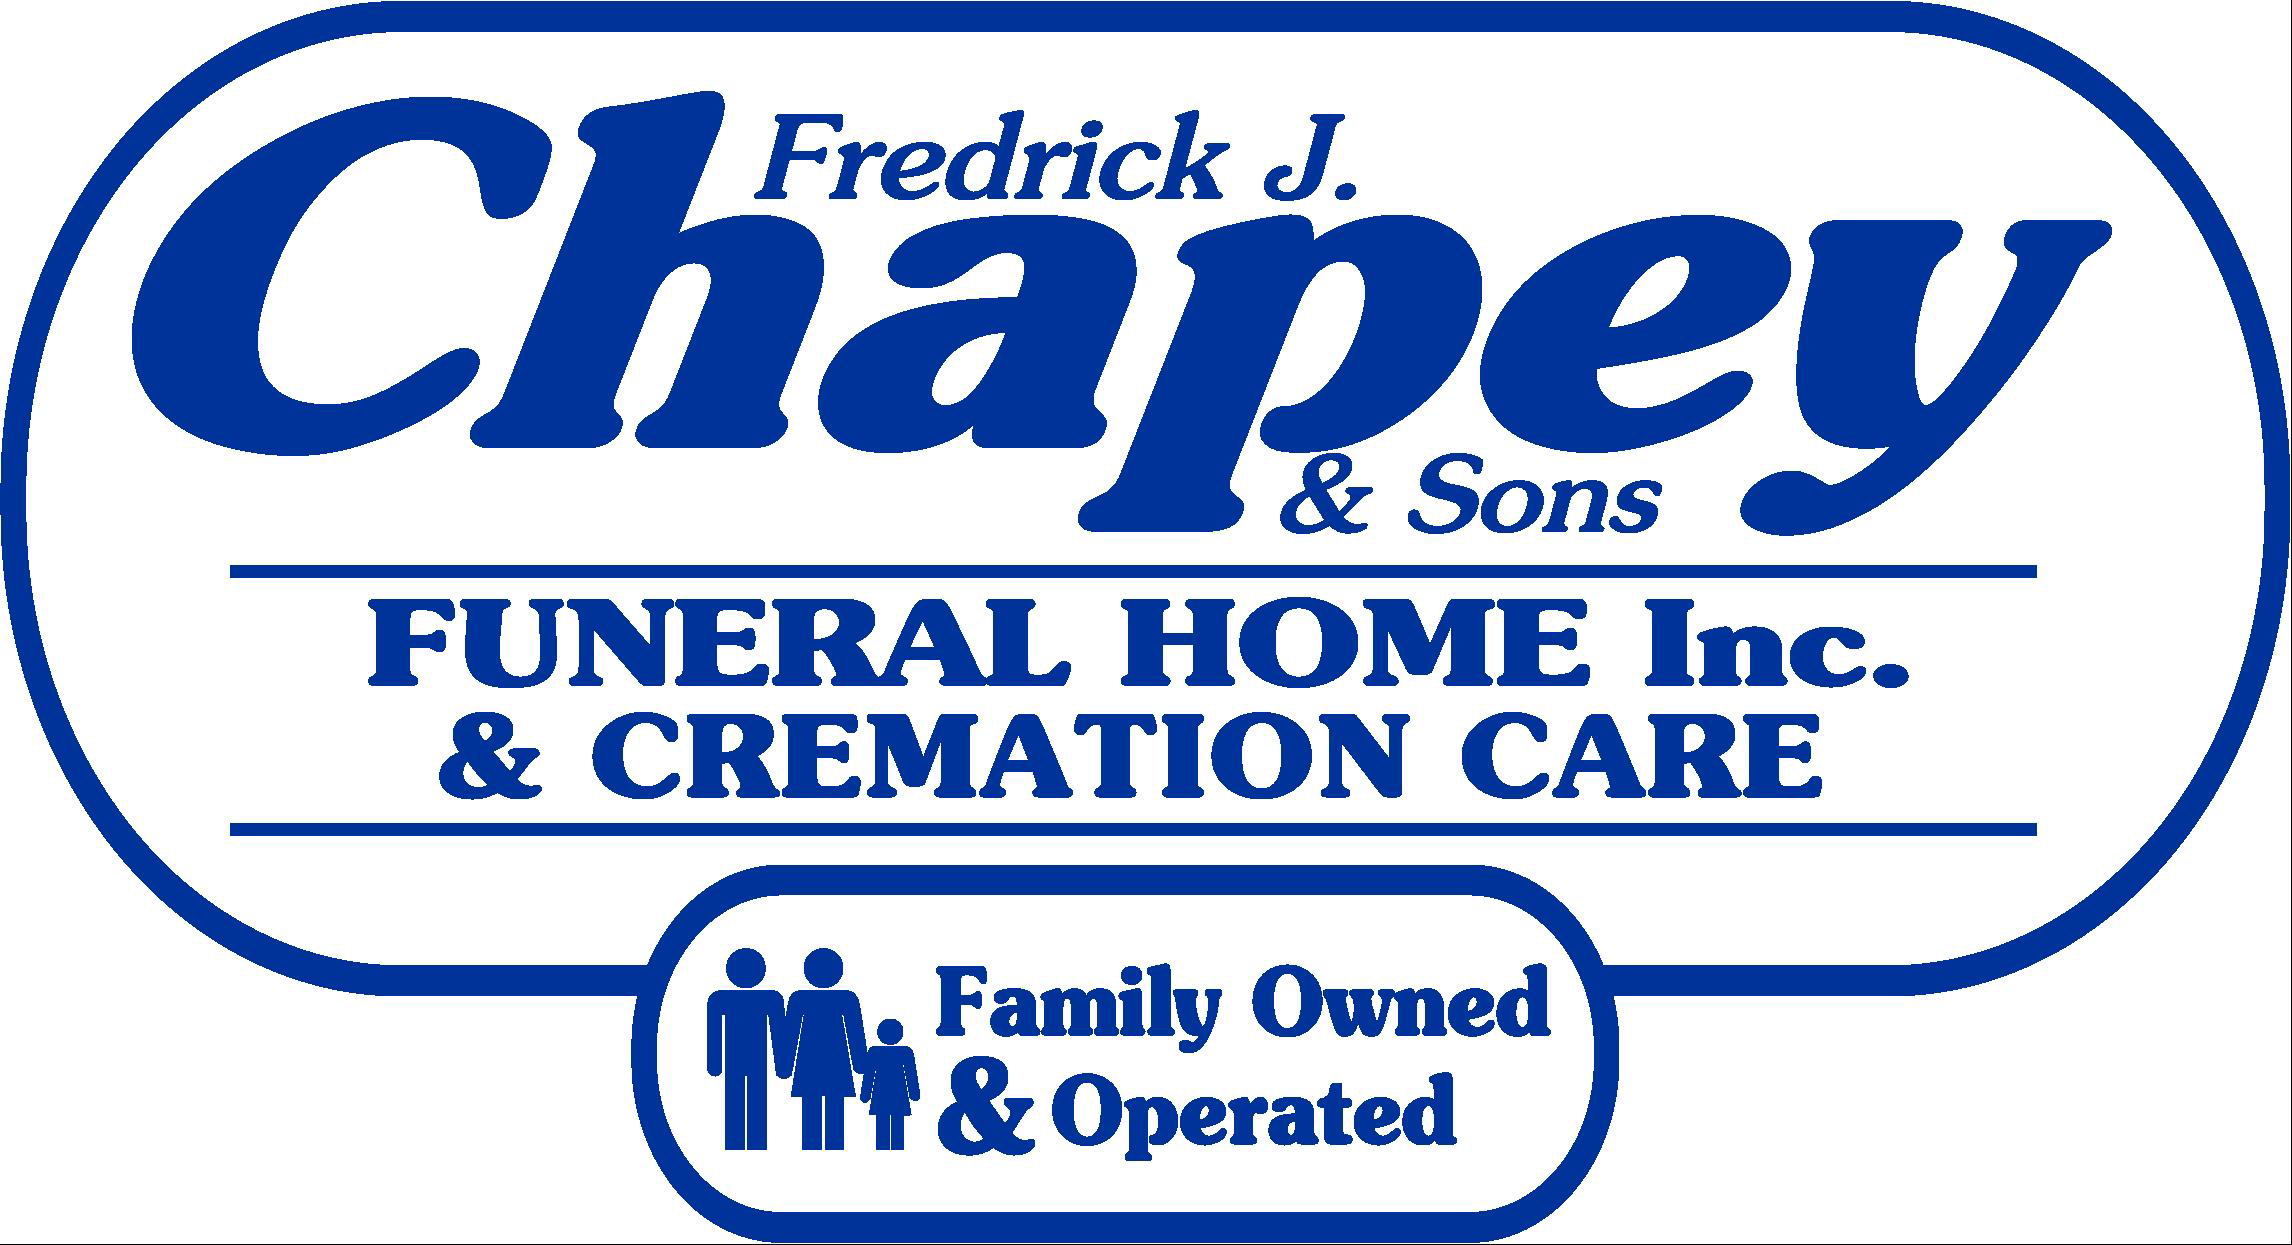 Fredrick J. Chapey & Sons Funeral Home